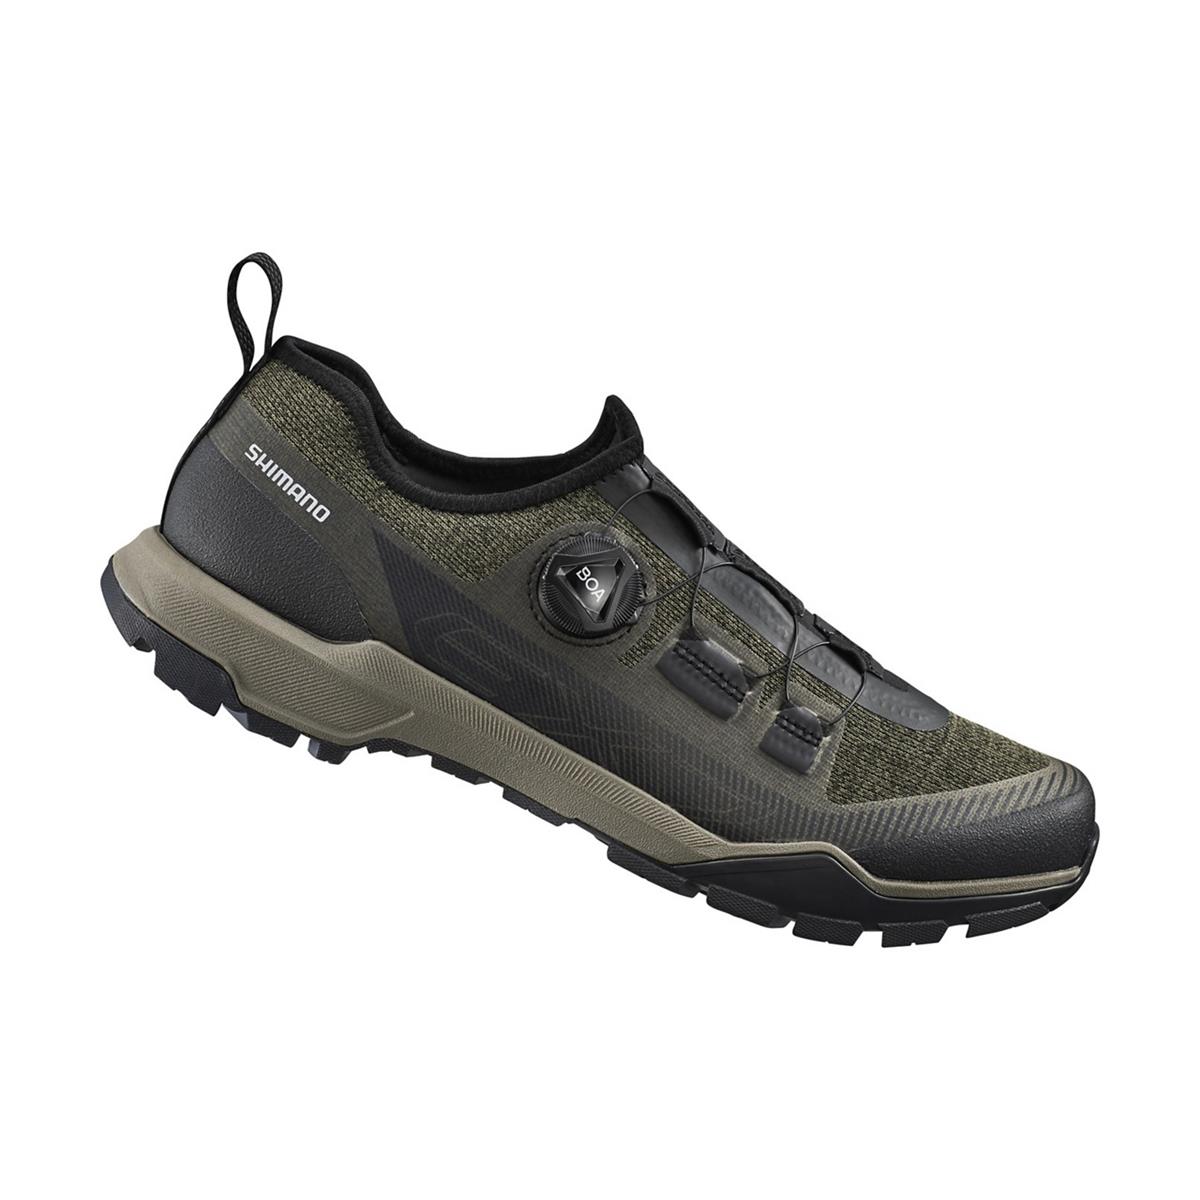 Trekking / MTB Shoes SH-EX700 Green Size 40